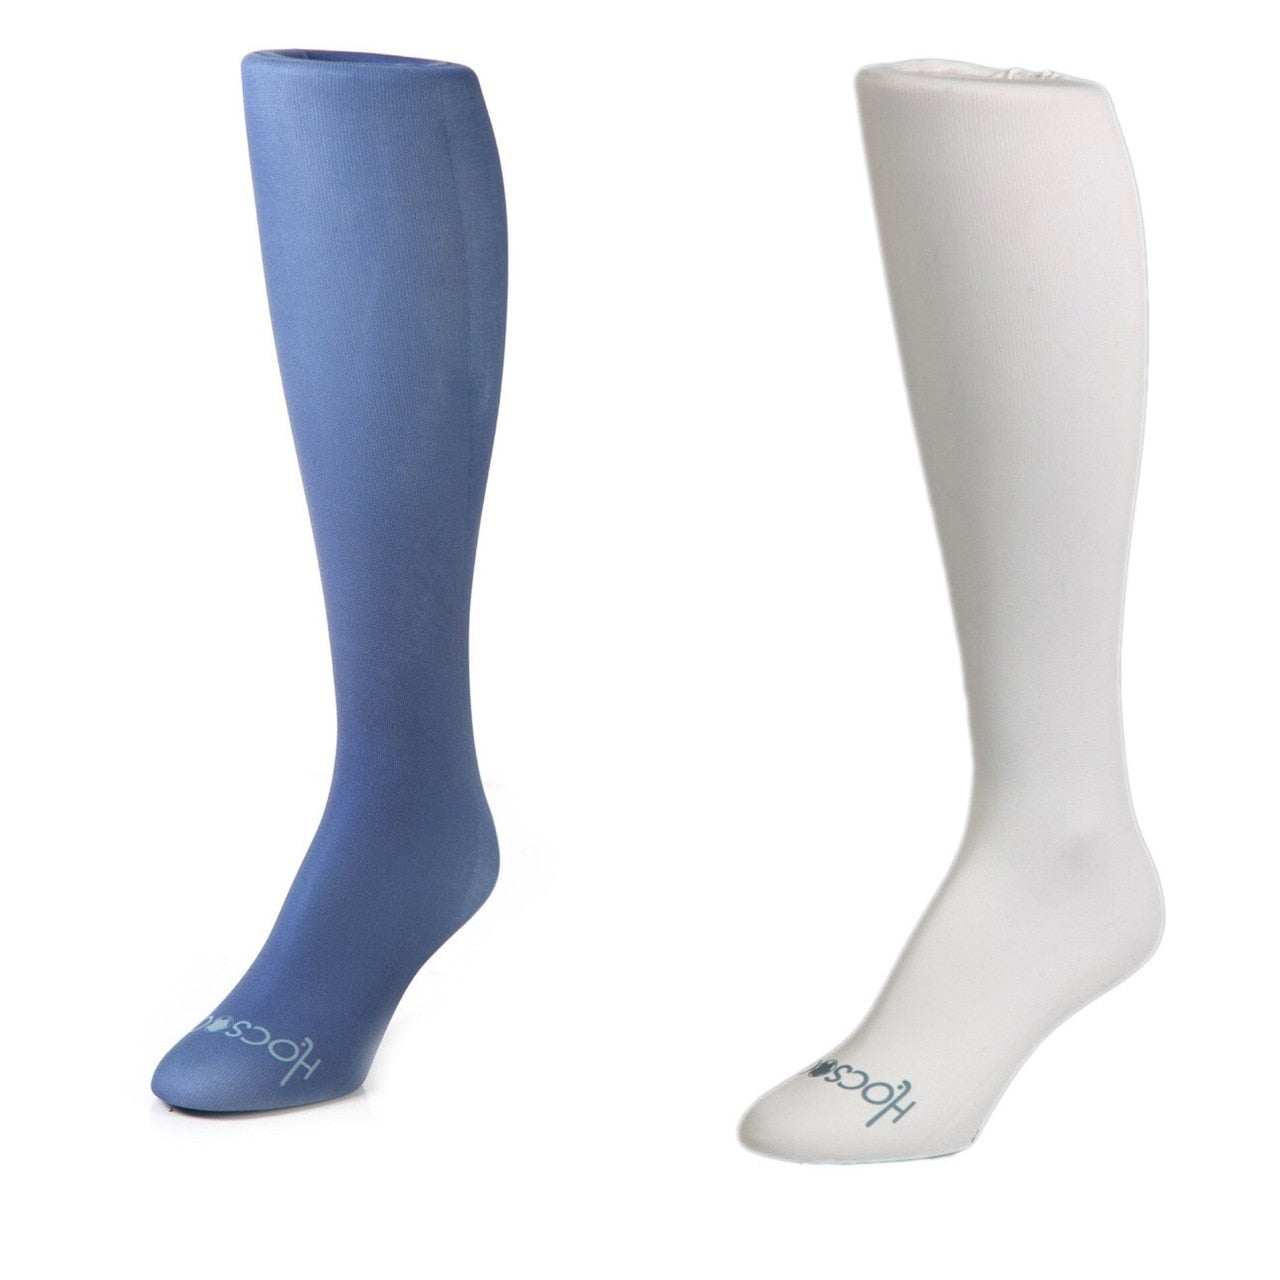 Hocsocx Navy & White Performance Shin Guard Rash Liner Sport Socks